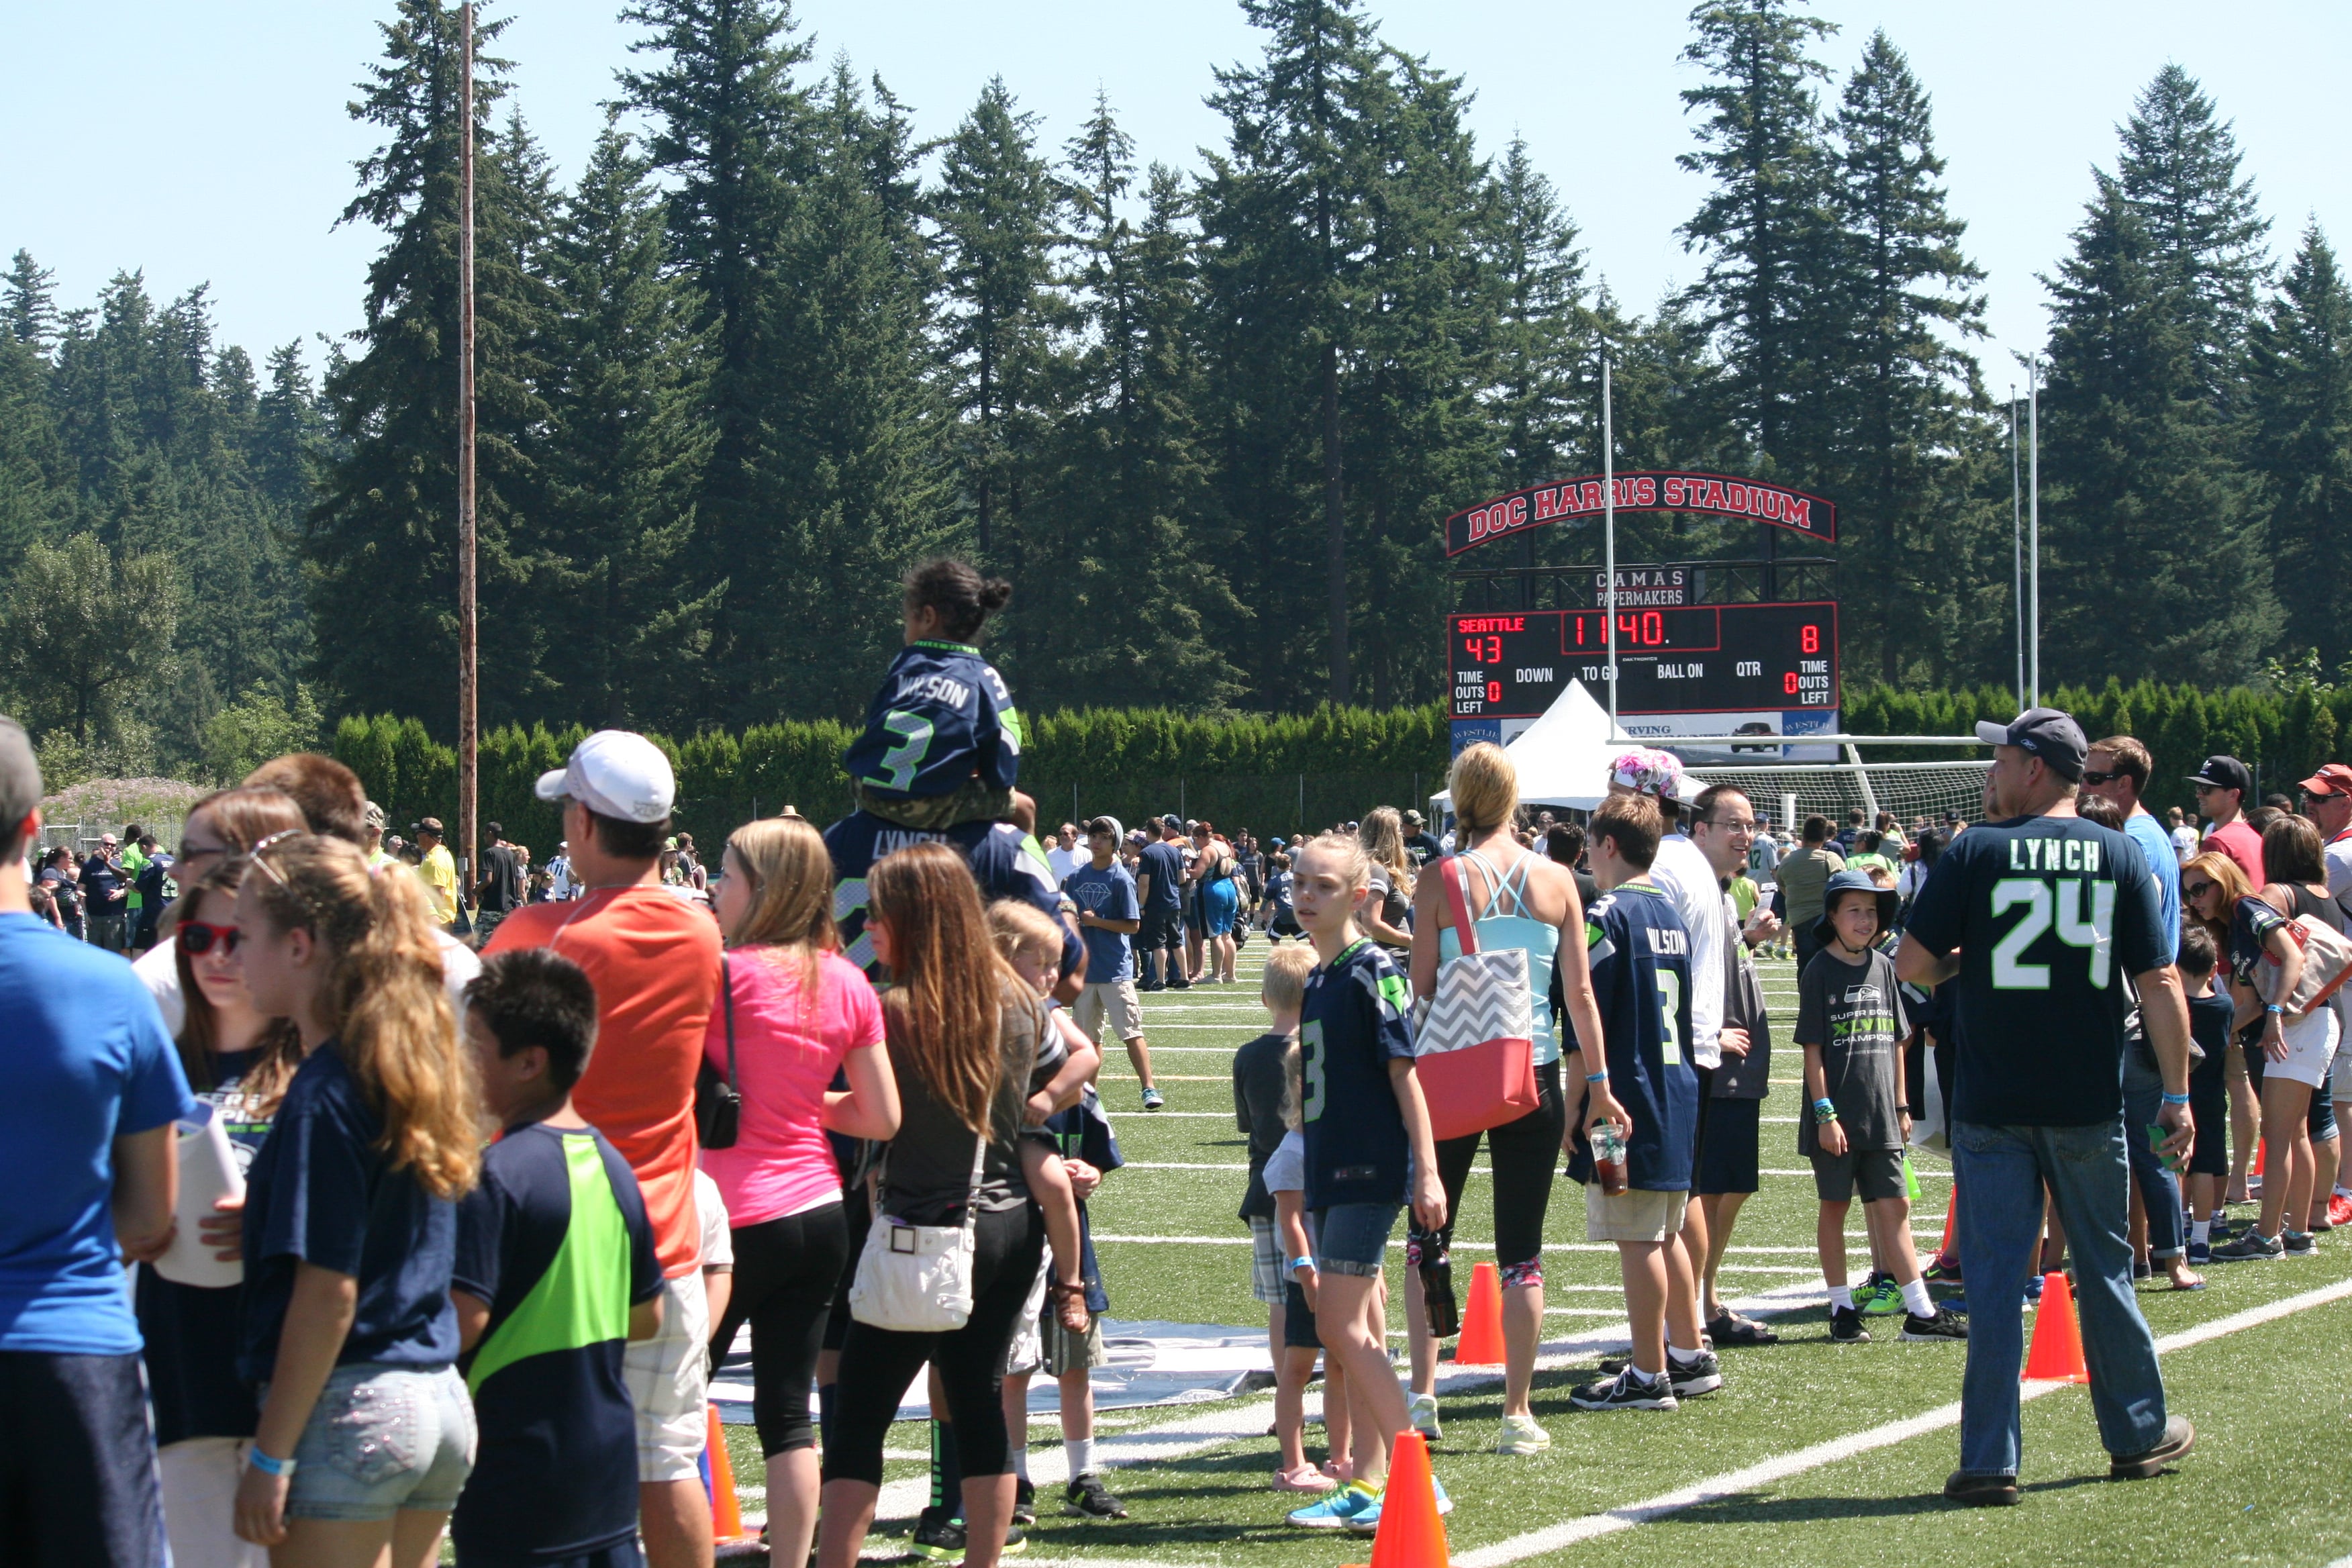 Seattle Seahawks Play 60 Family Fest at Doc Harris Stadium, in Camas.